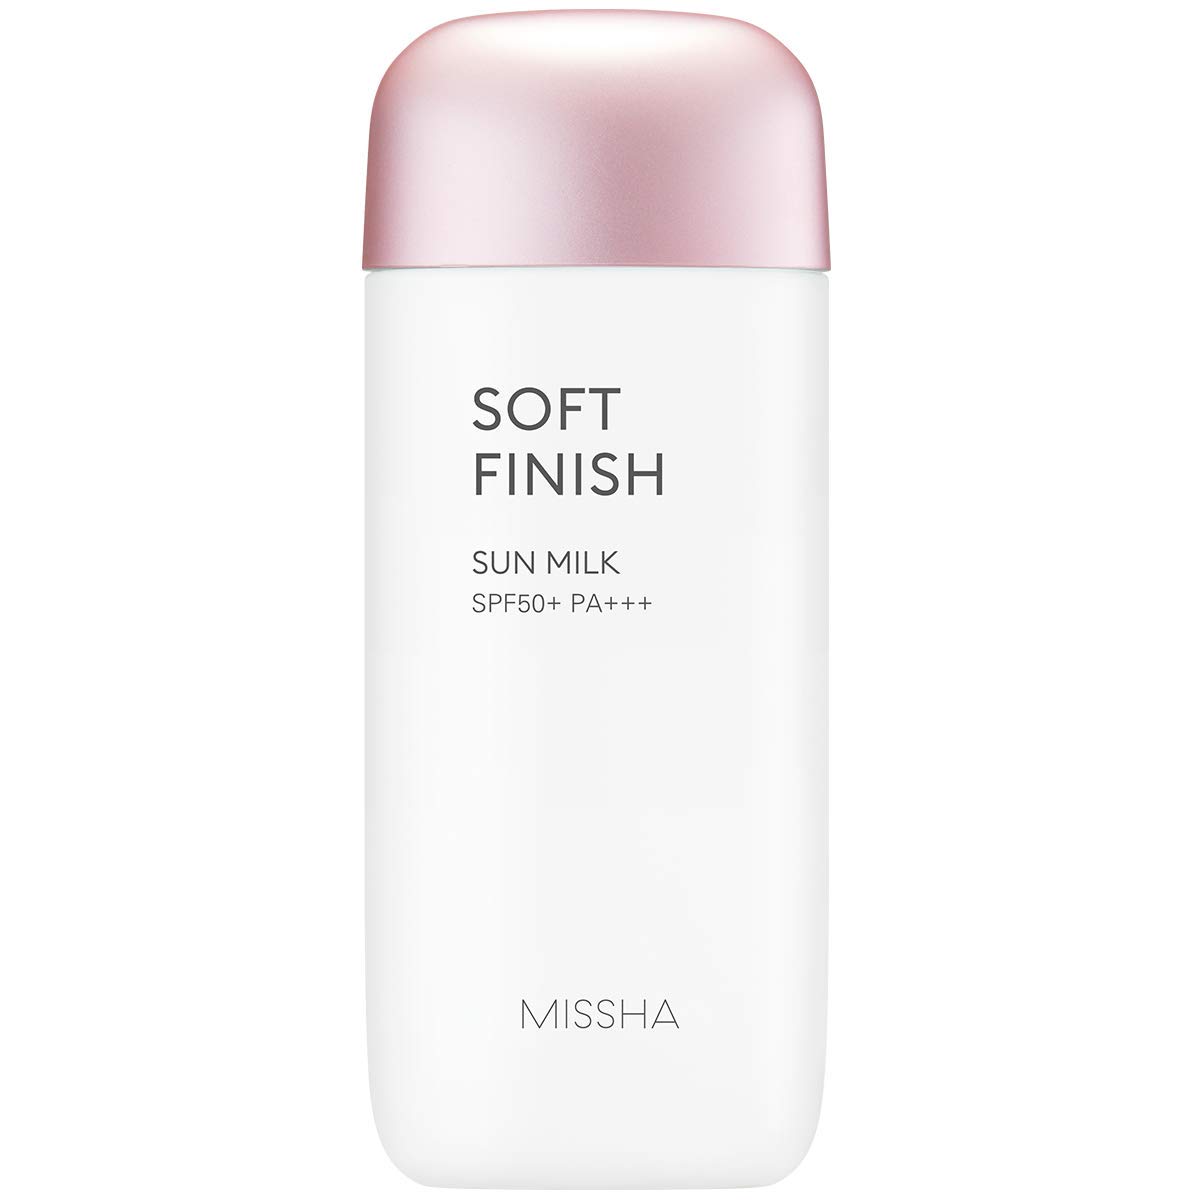 Missha soft finish sun milk